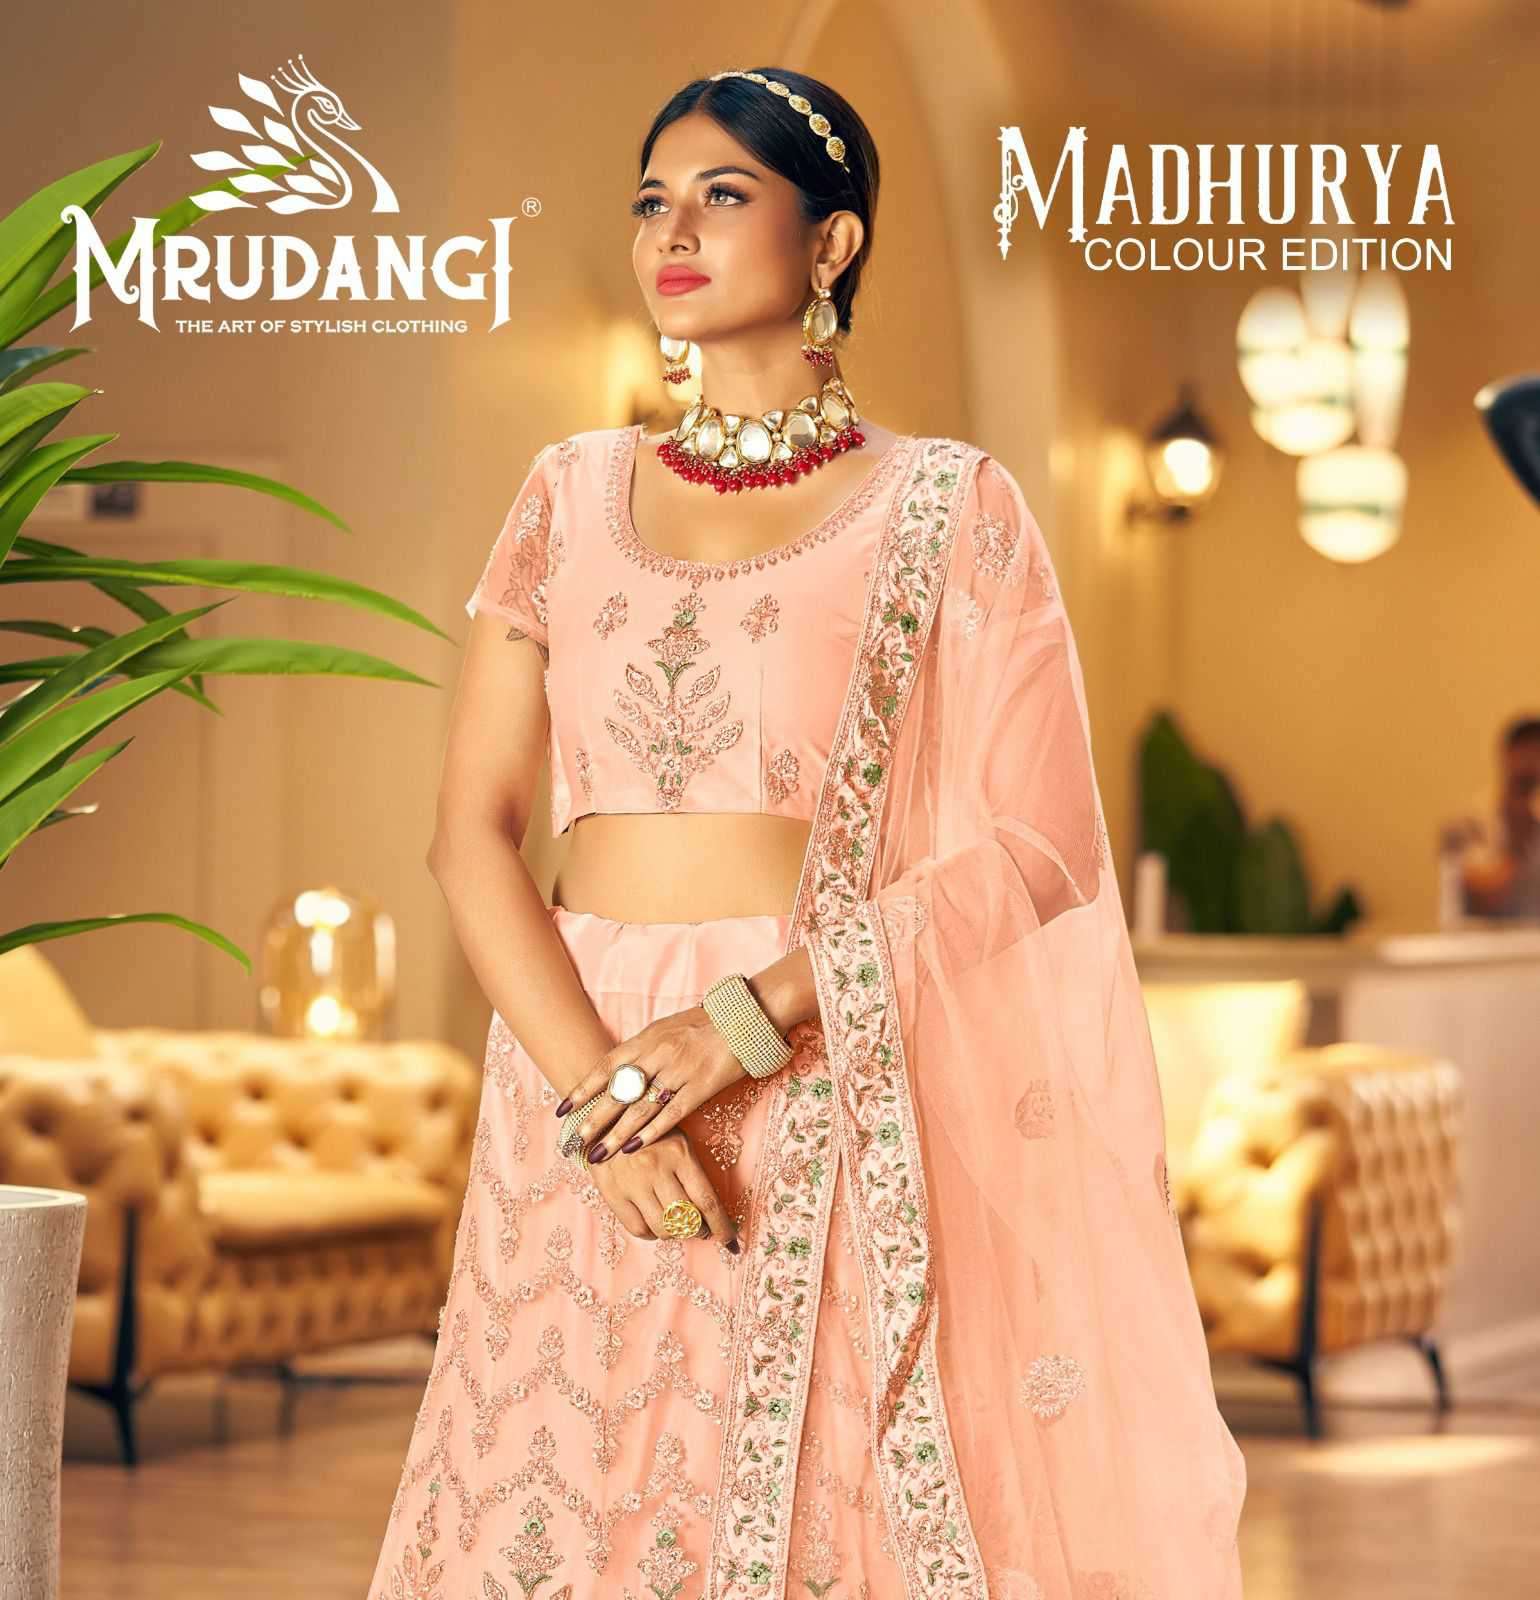 Mrudangi Madhurya 1044 Colors Wedding Function Lahenga Choli New Collection